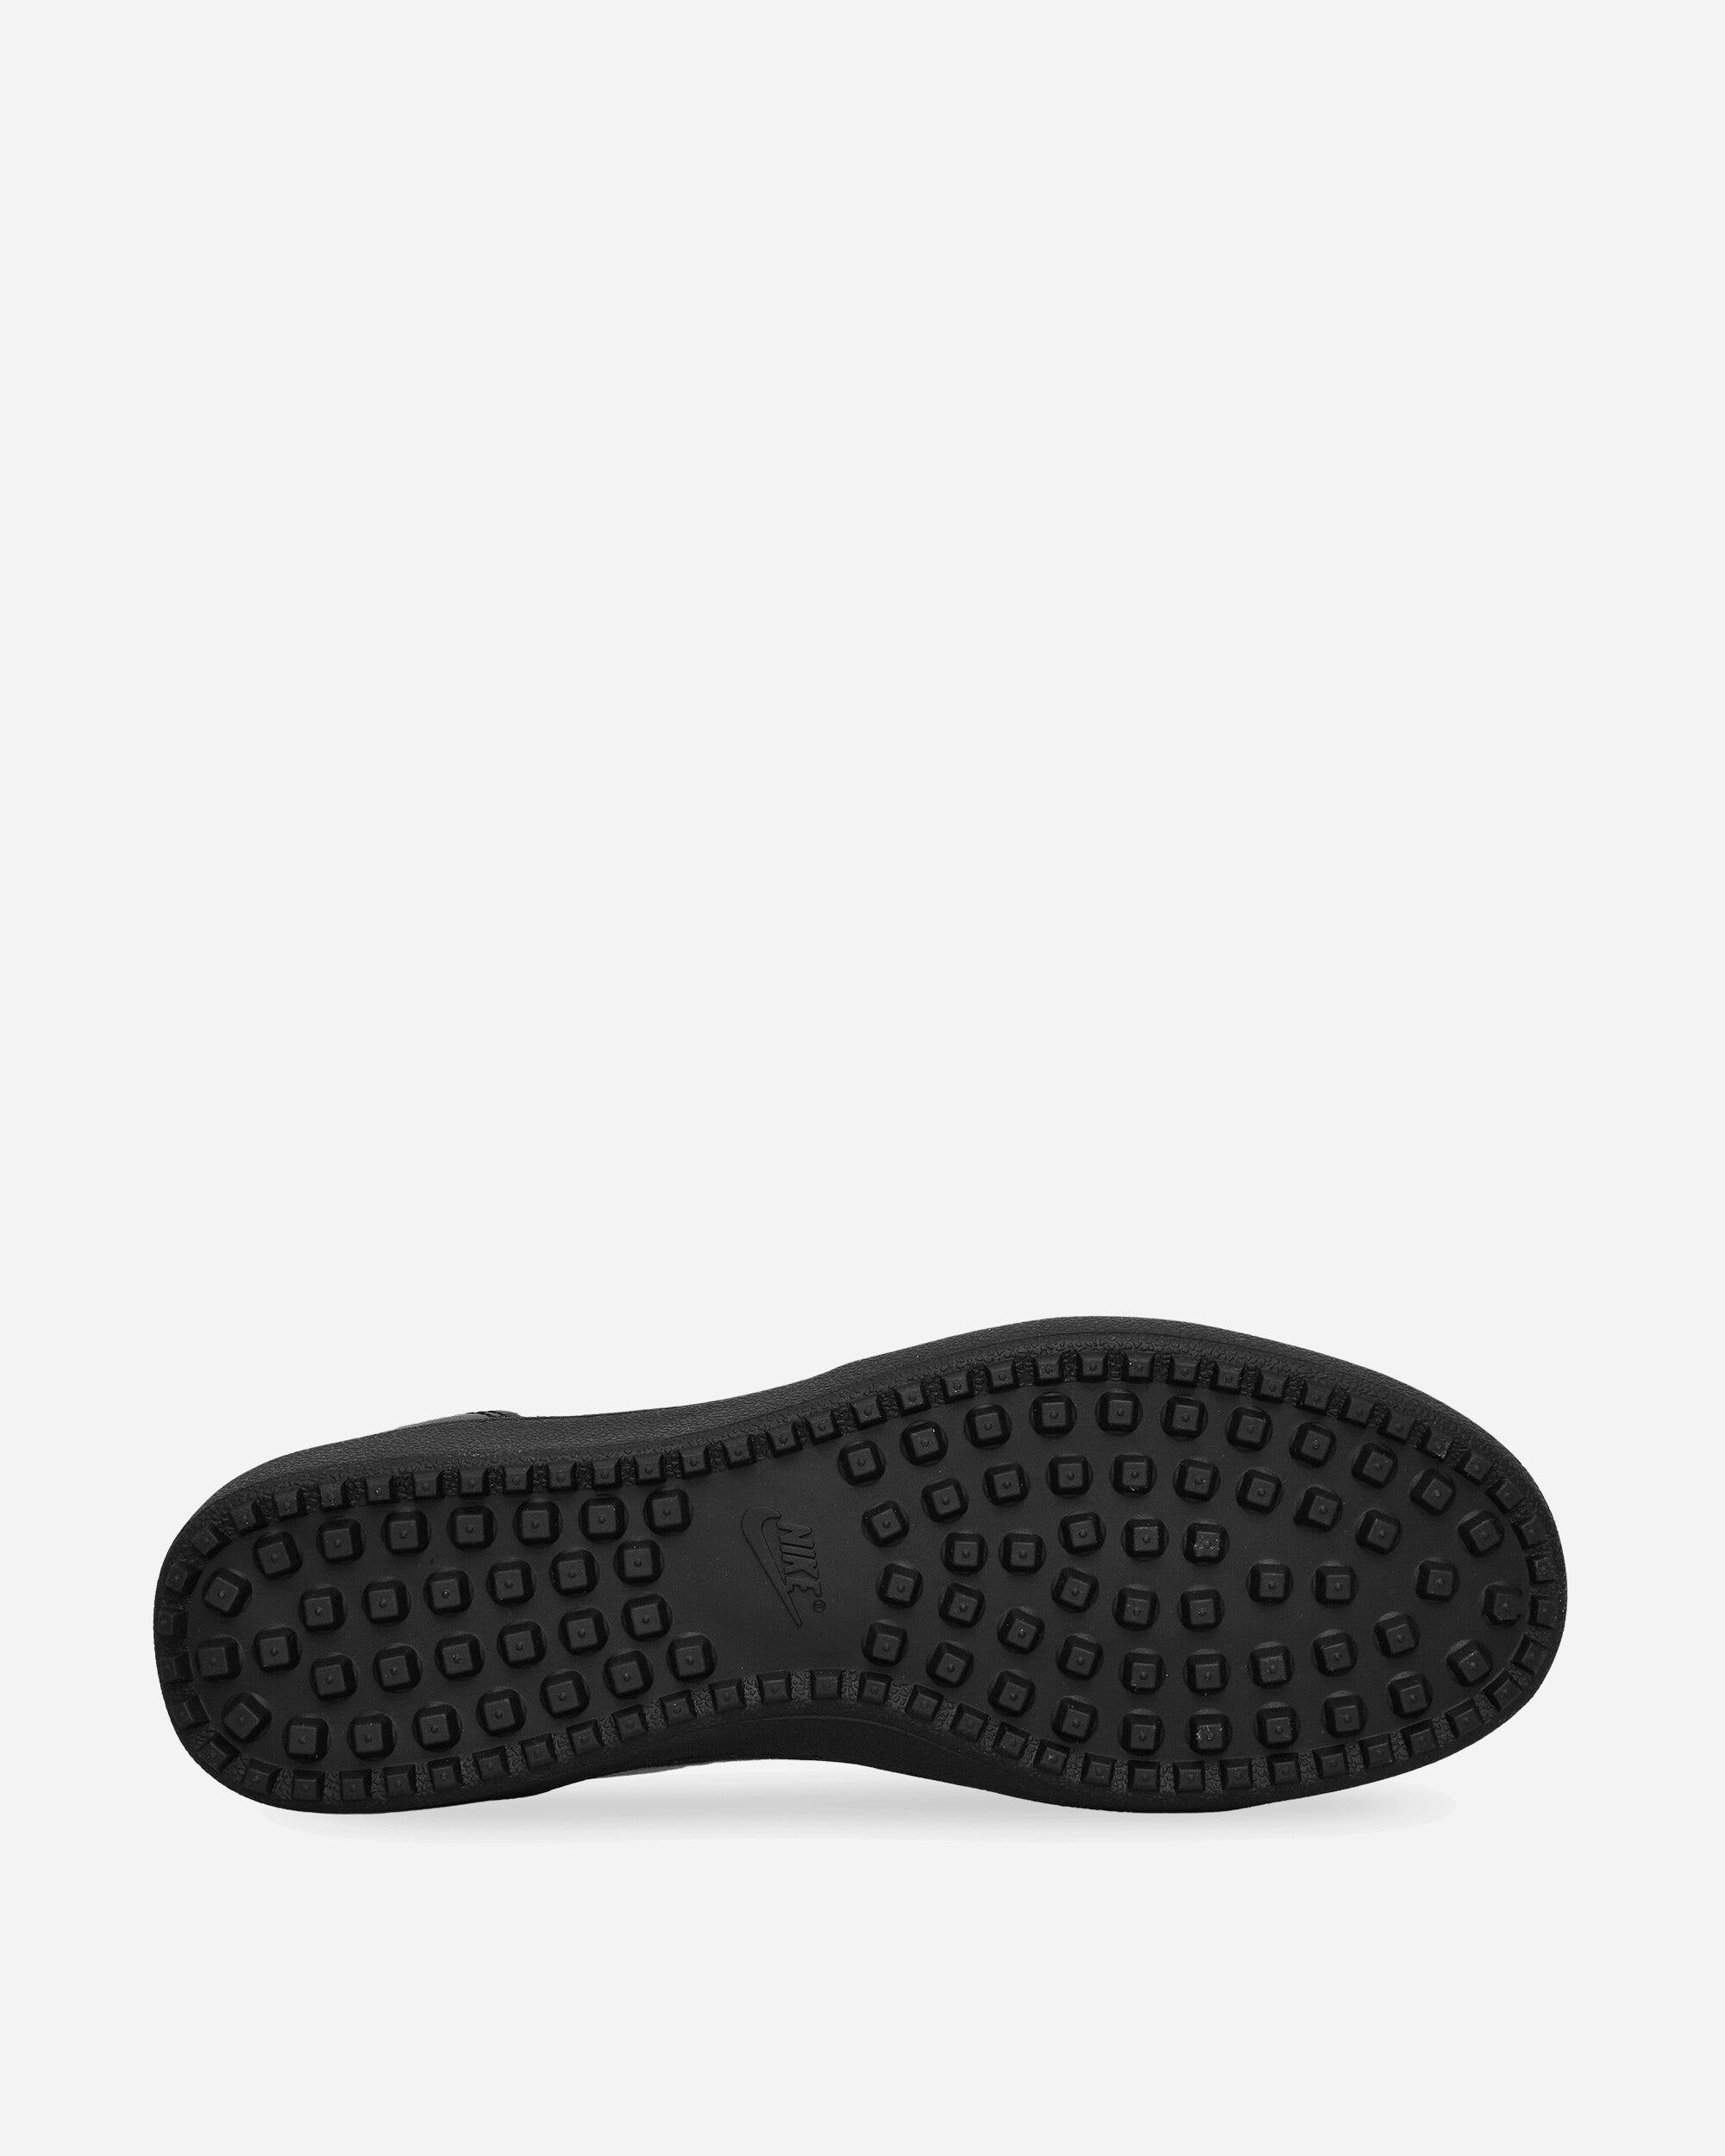 Nike Nike Field General 82 Sp Black/White Sneakers Low FQ8762-001